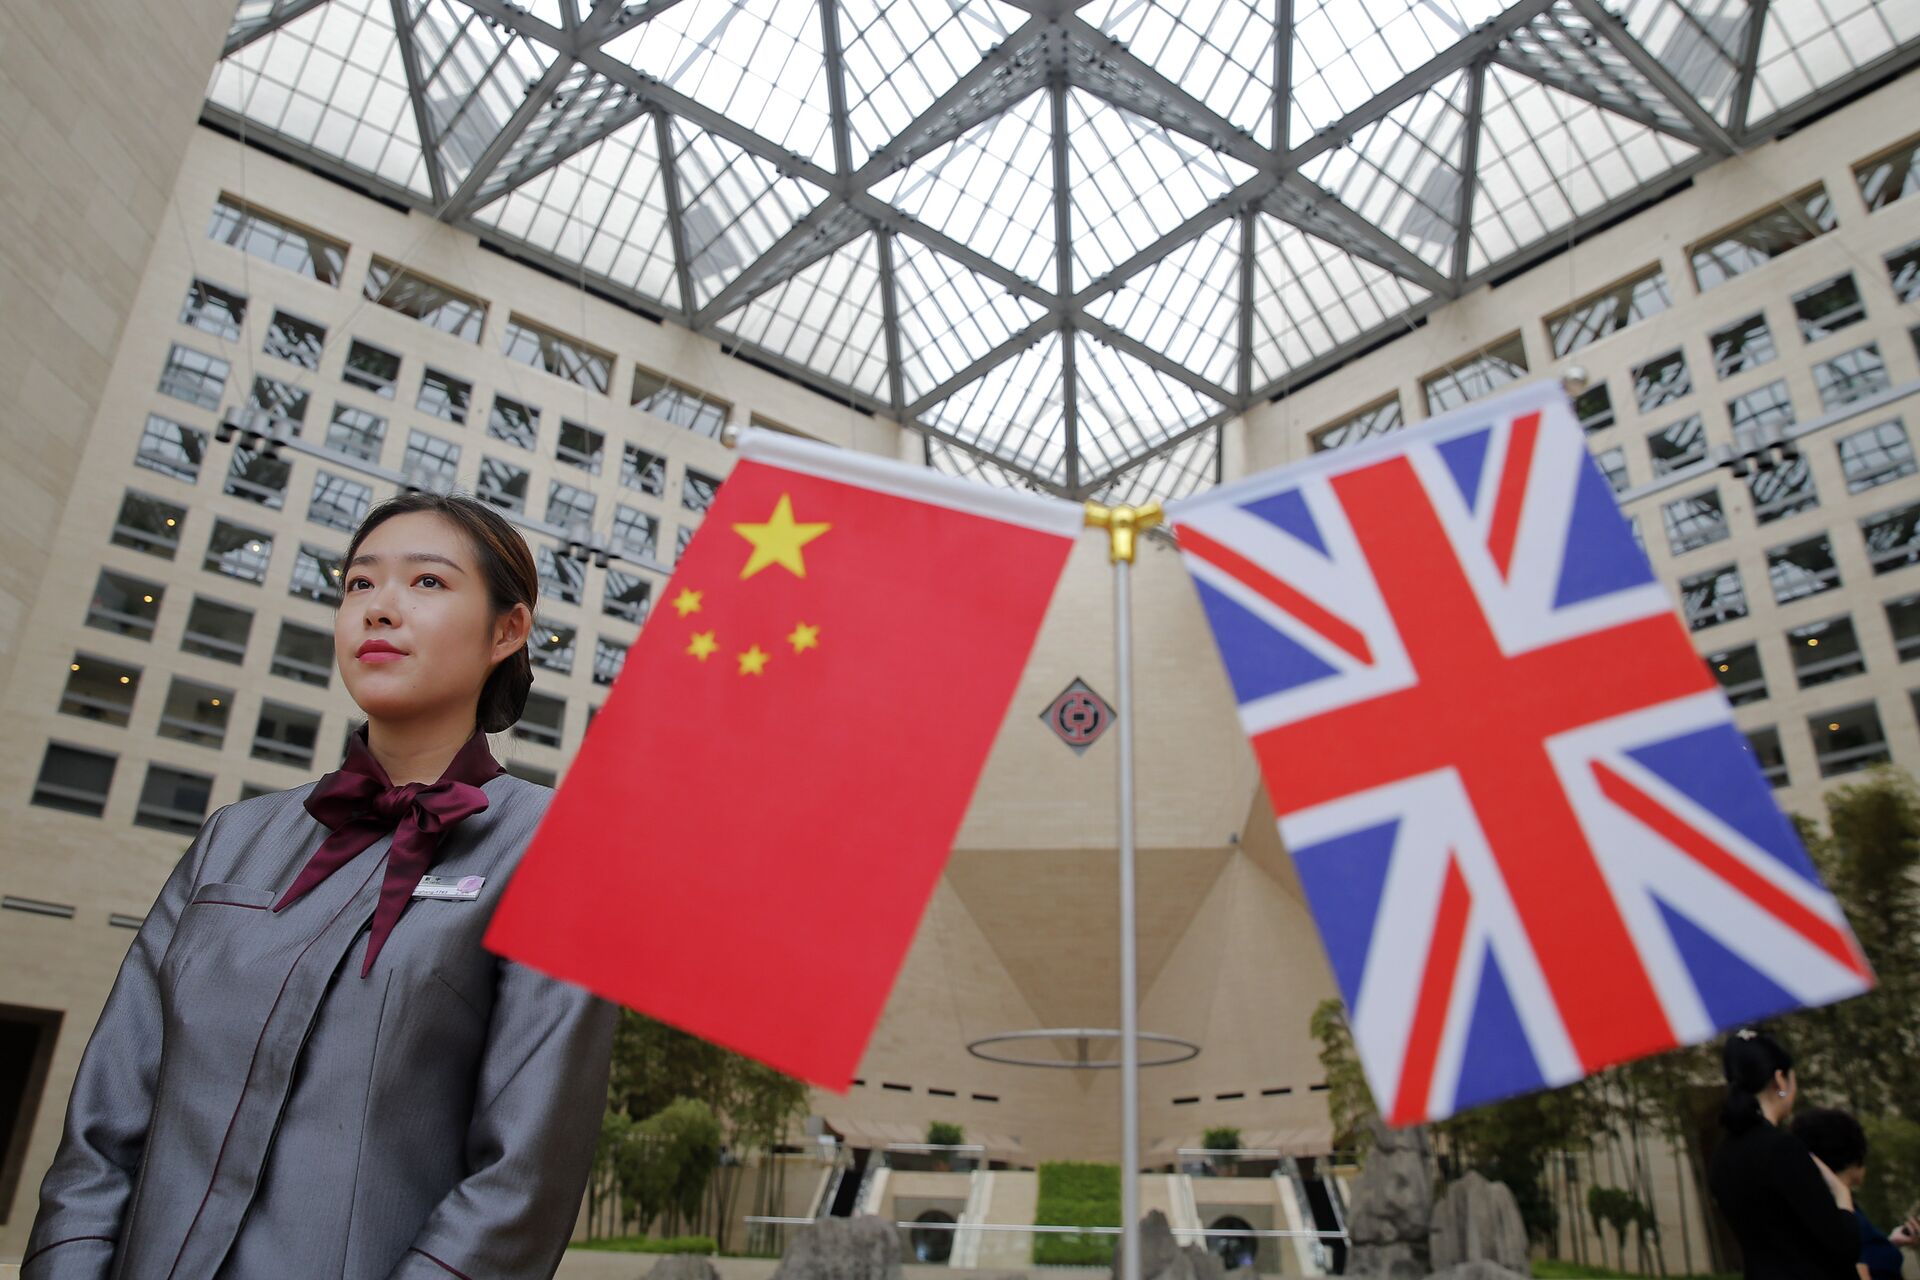 UK's Raab Calls on China to Allow UN to Xinjiang After Beijing Sanctions British Officials - Sputnik International, 1920, 26.03.2021